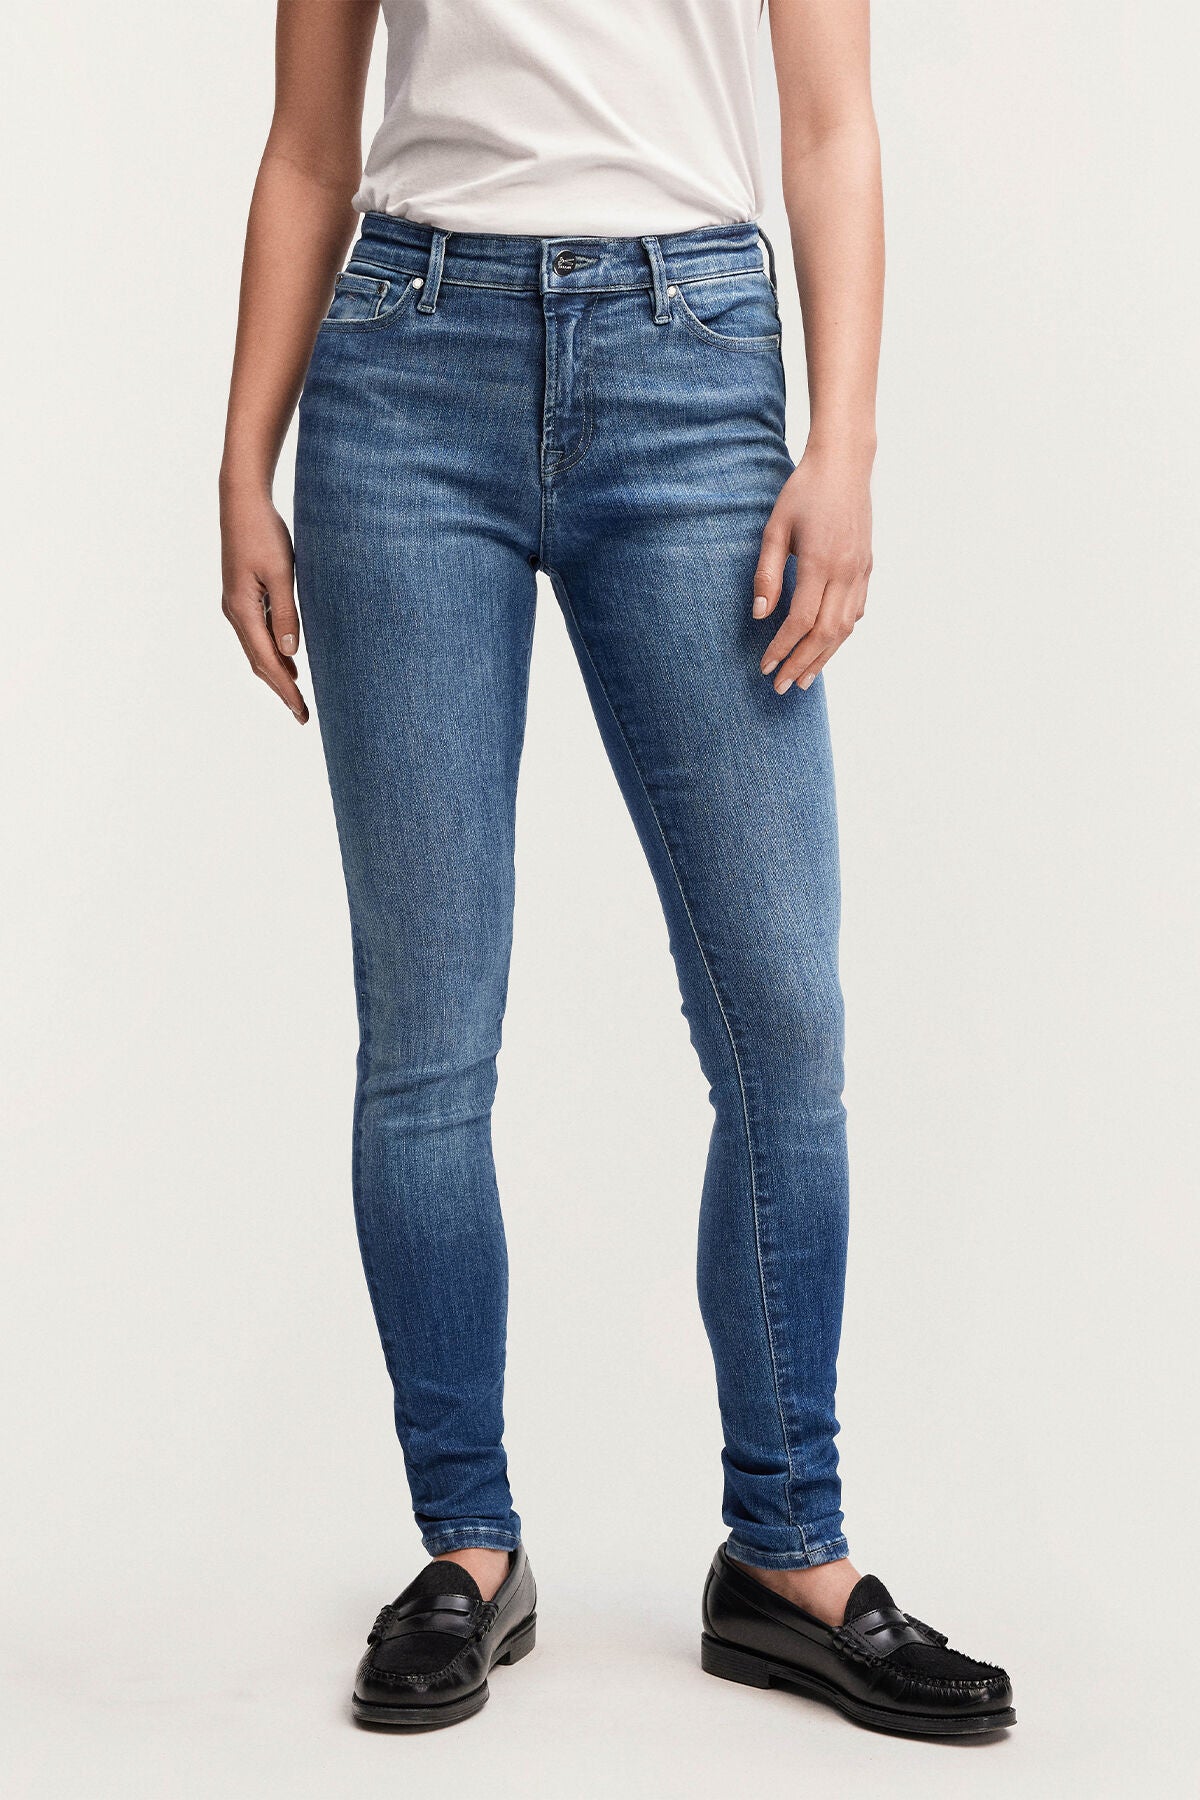 A woman is standing in Denham's NEEDLE Skinny - Light Indigo denim jeans.